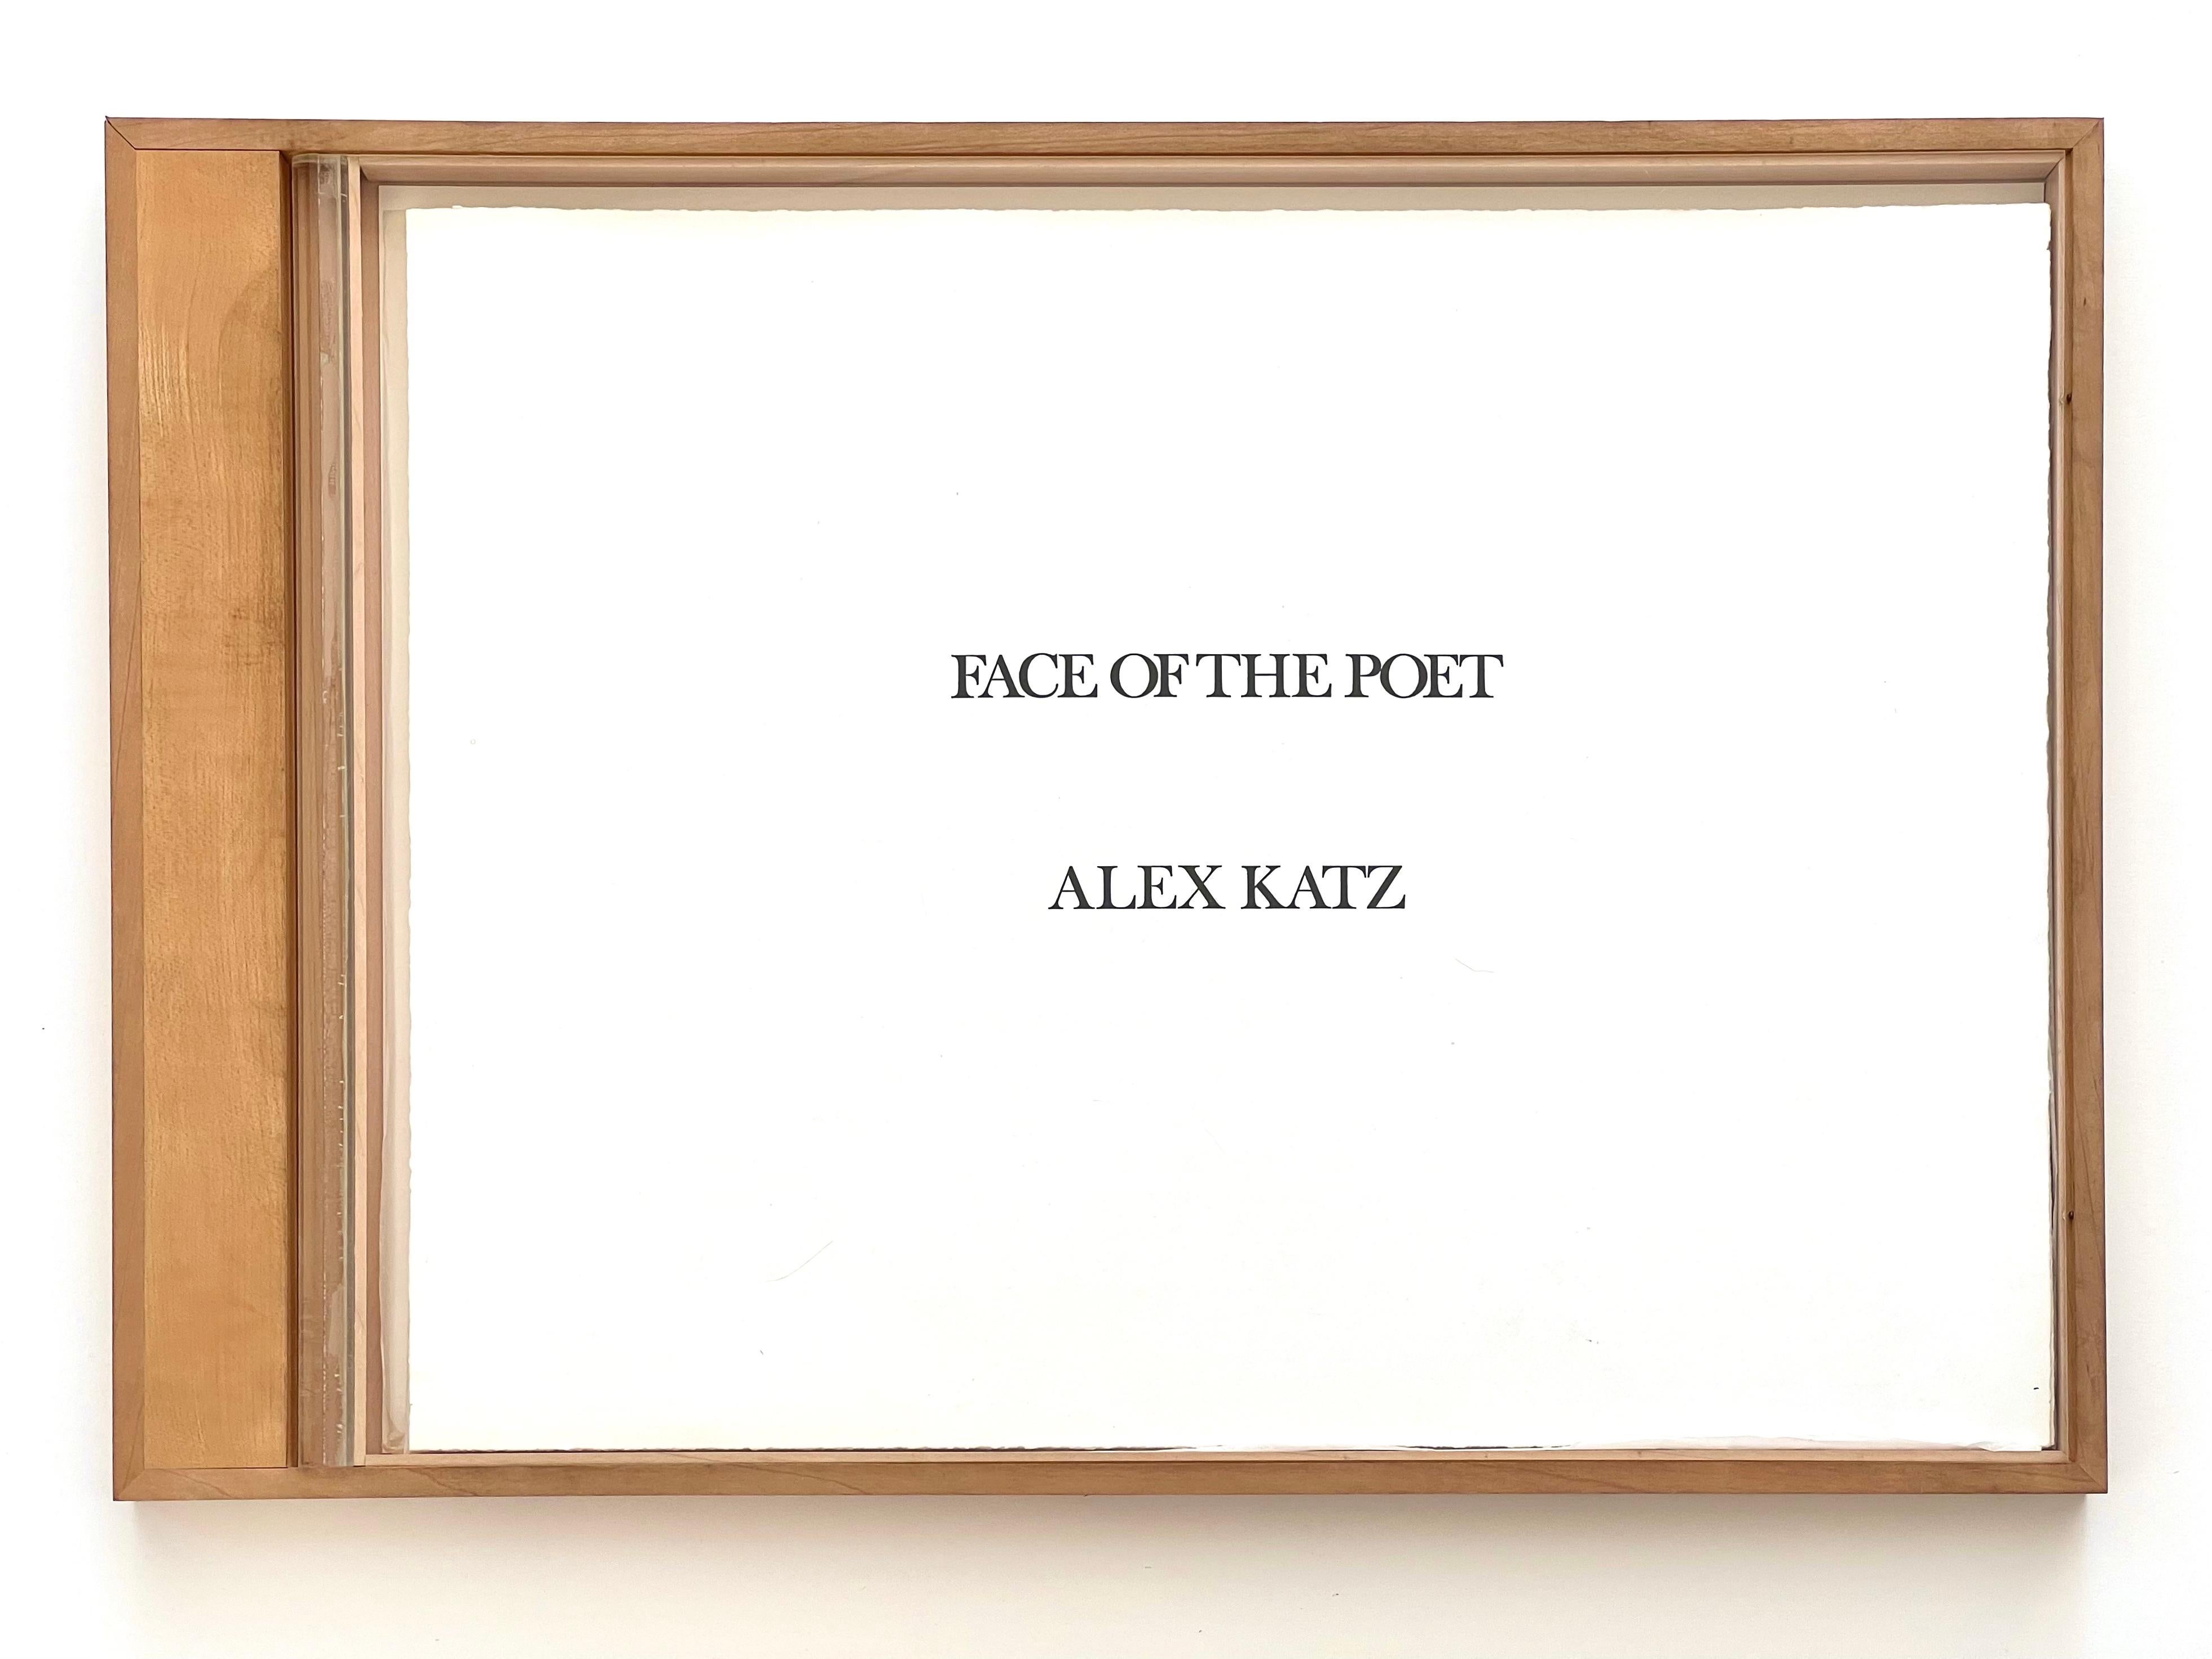 Face of the Poet - Print by Alex Katz